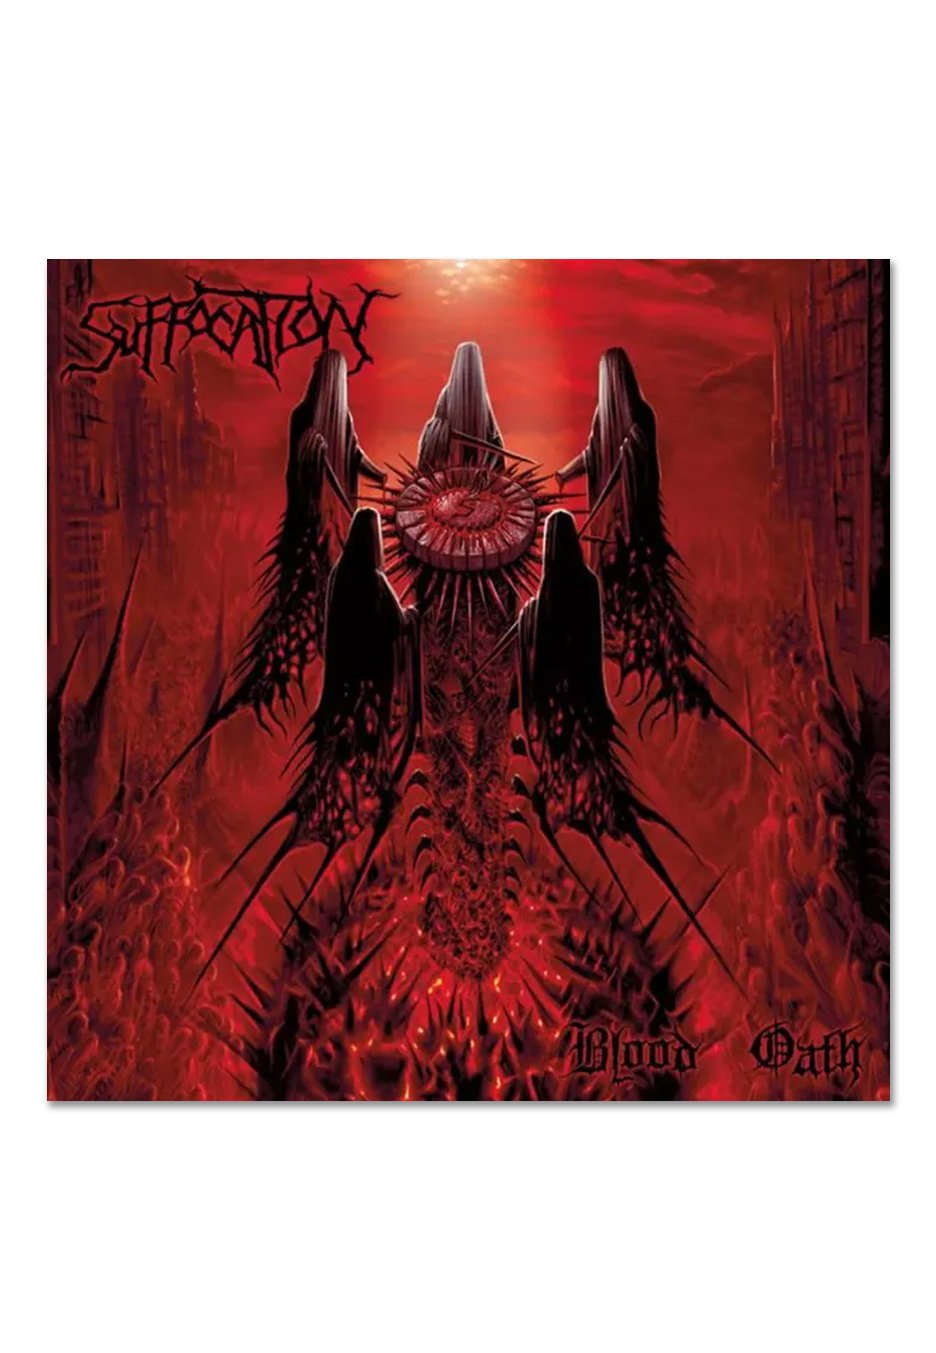 Suffocation - Blood Oath Ltd. Red/Black Corona - Colored Vinyl